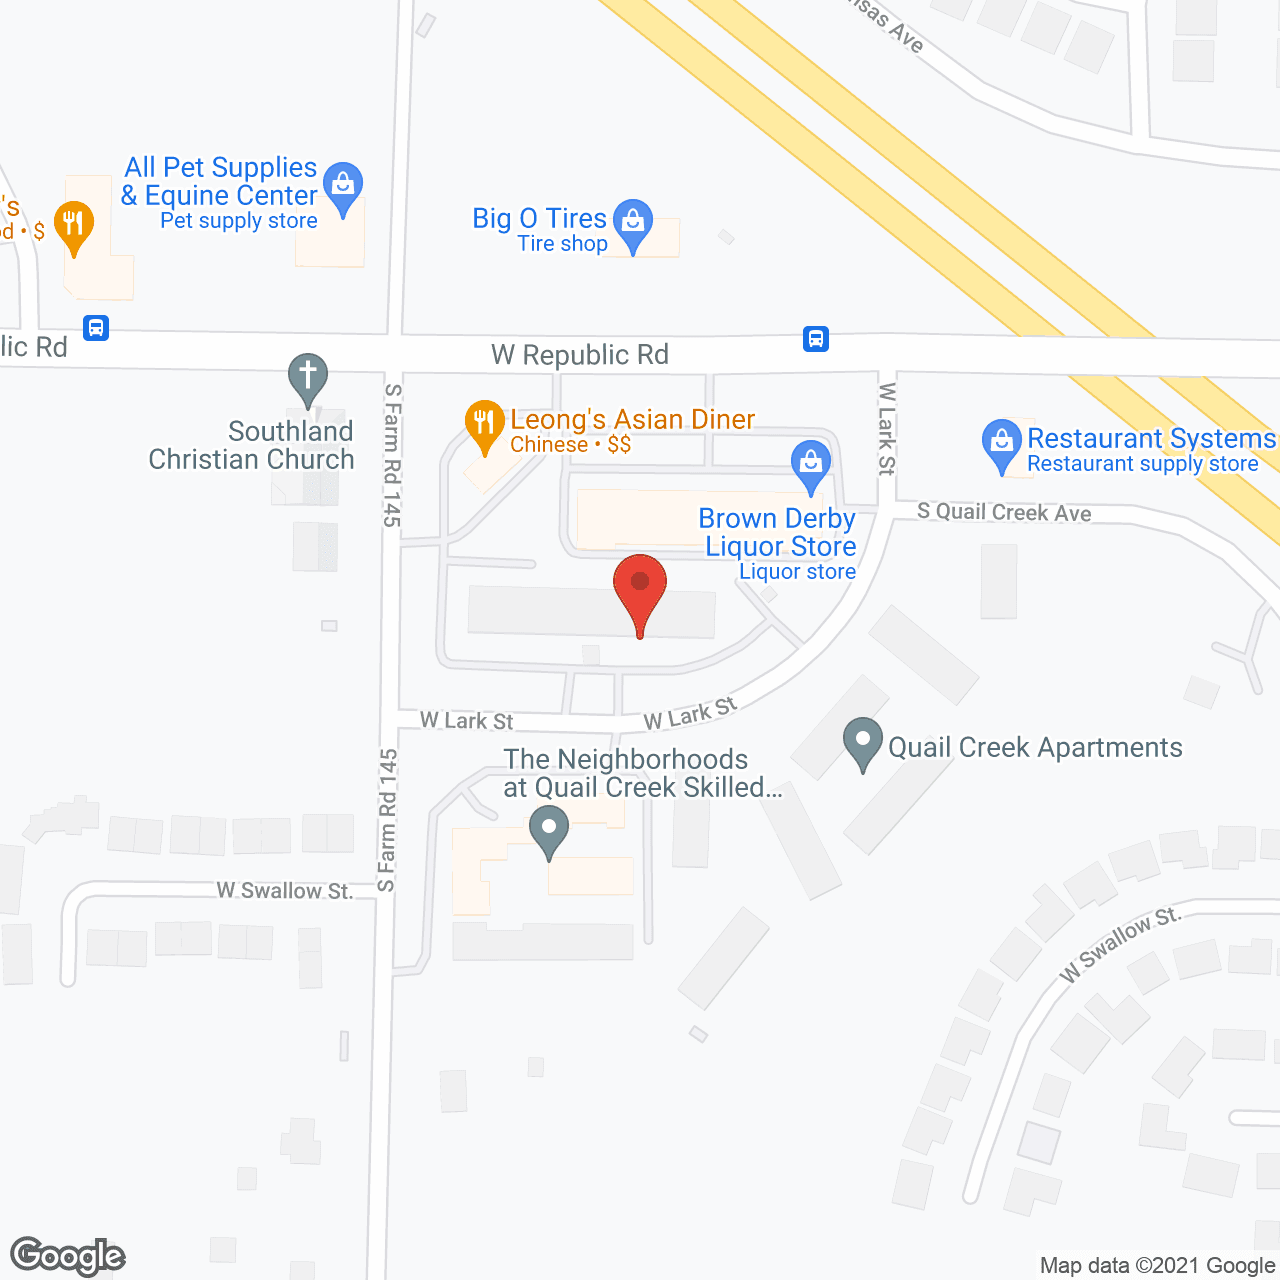 Villas at Quail Creek in google map